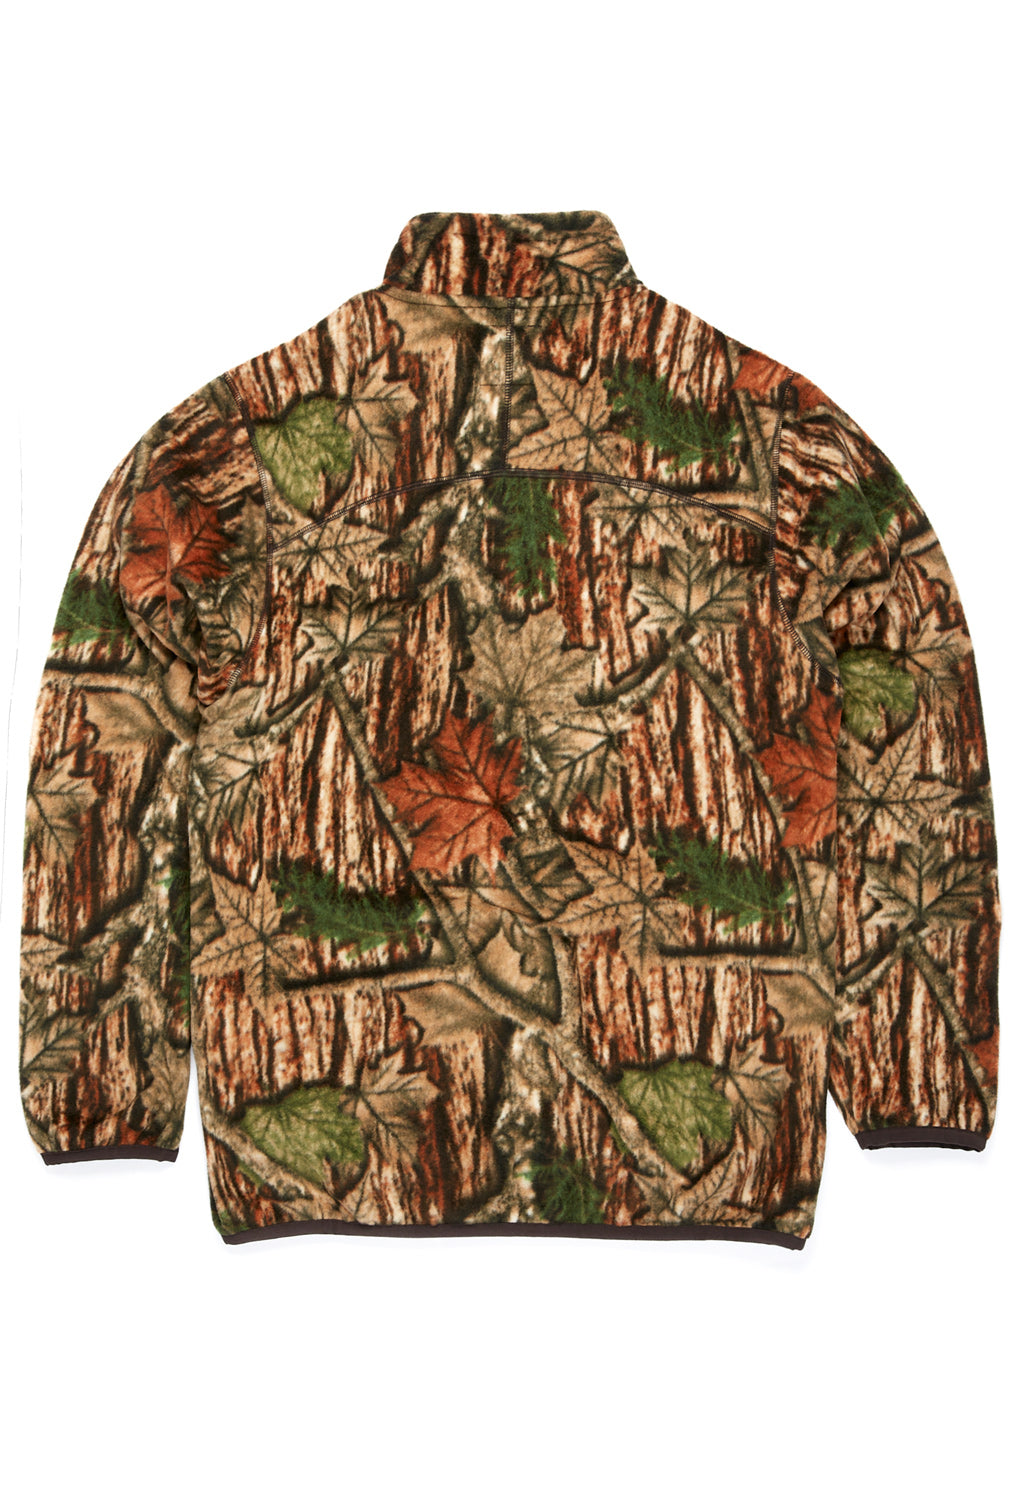 Gramicci Thermal Fleece Jacket - Leaf Camo